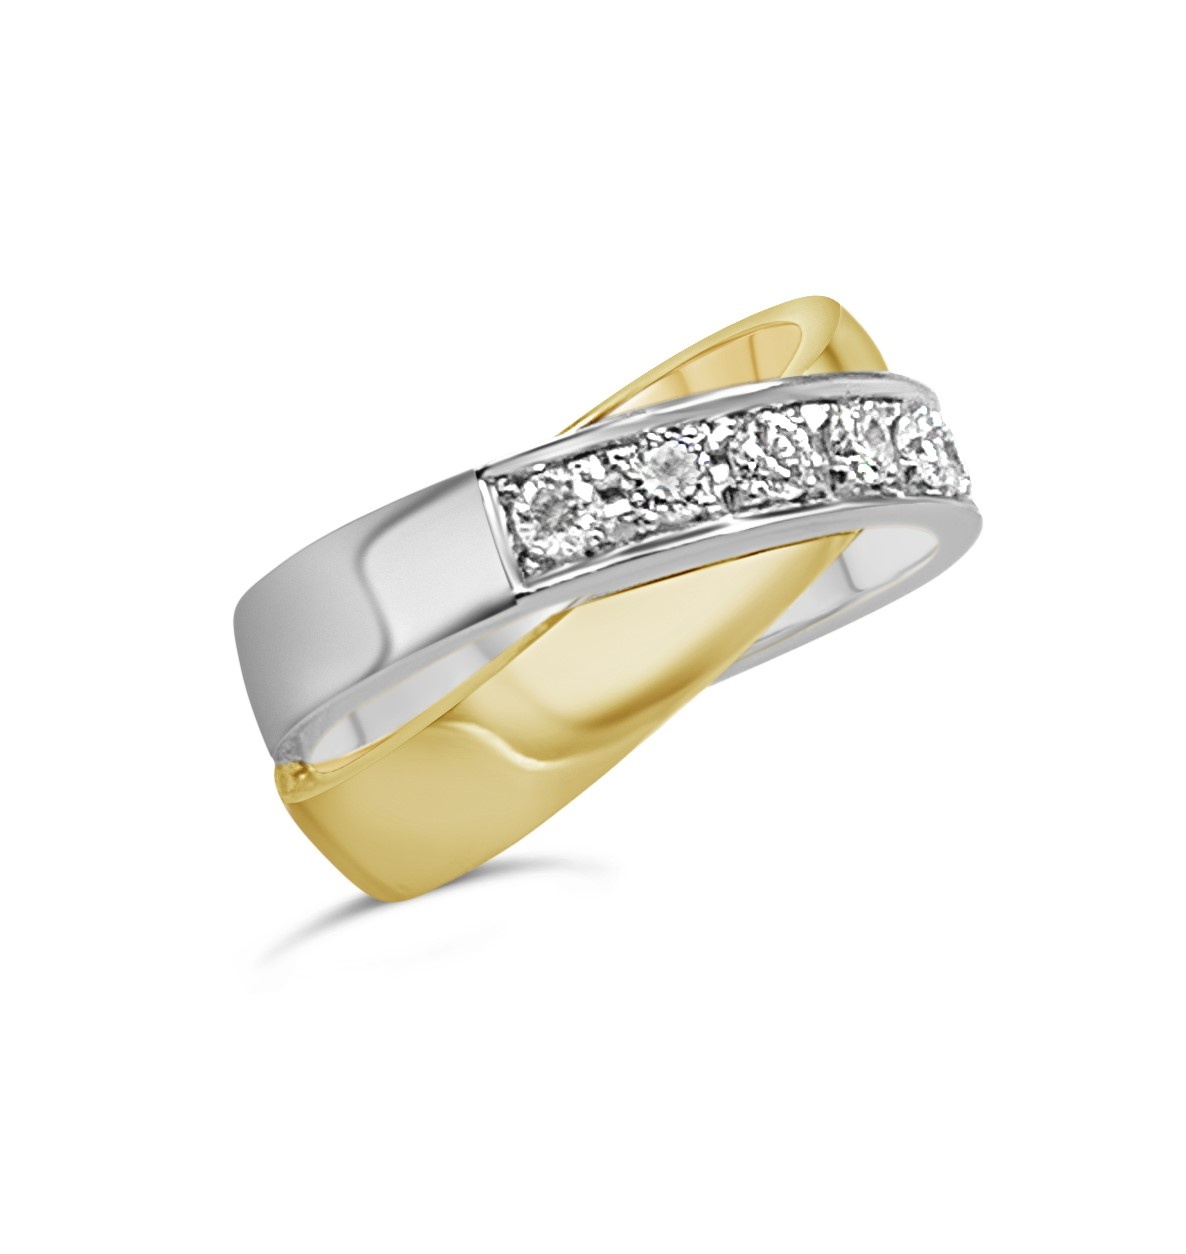 18k yellow & white  gold ring with 0,56ct diamonds